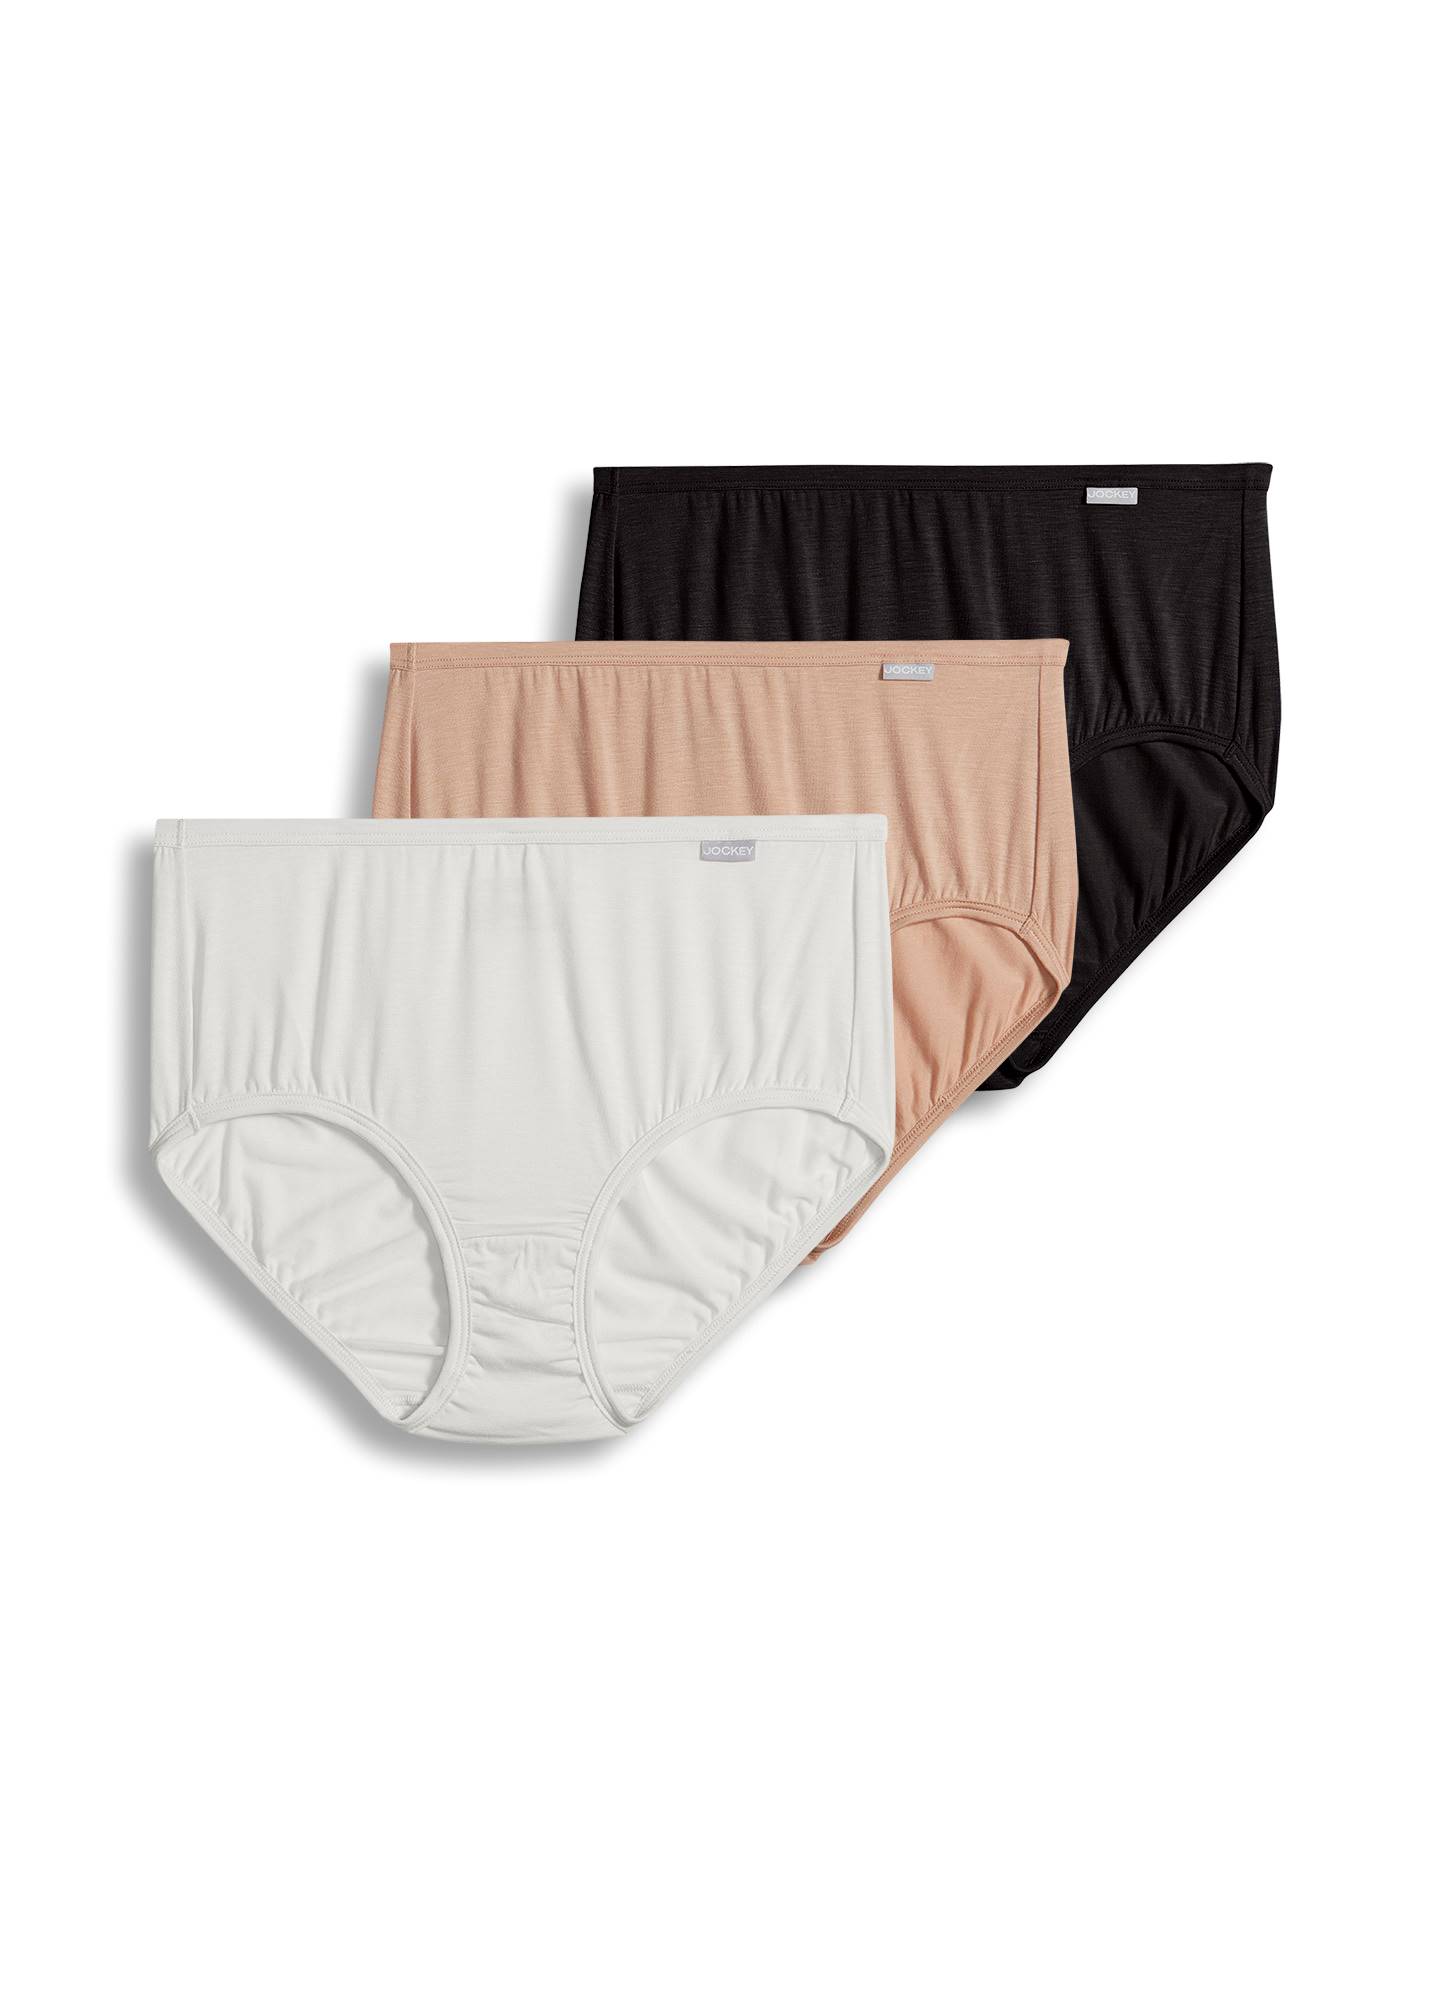 Jockey Women's Underwear Supersoft Hipster - 3 Pack, Oblong Dot/White/Blue  Orion, 6